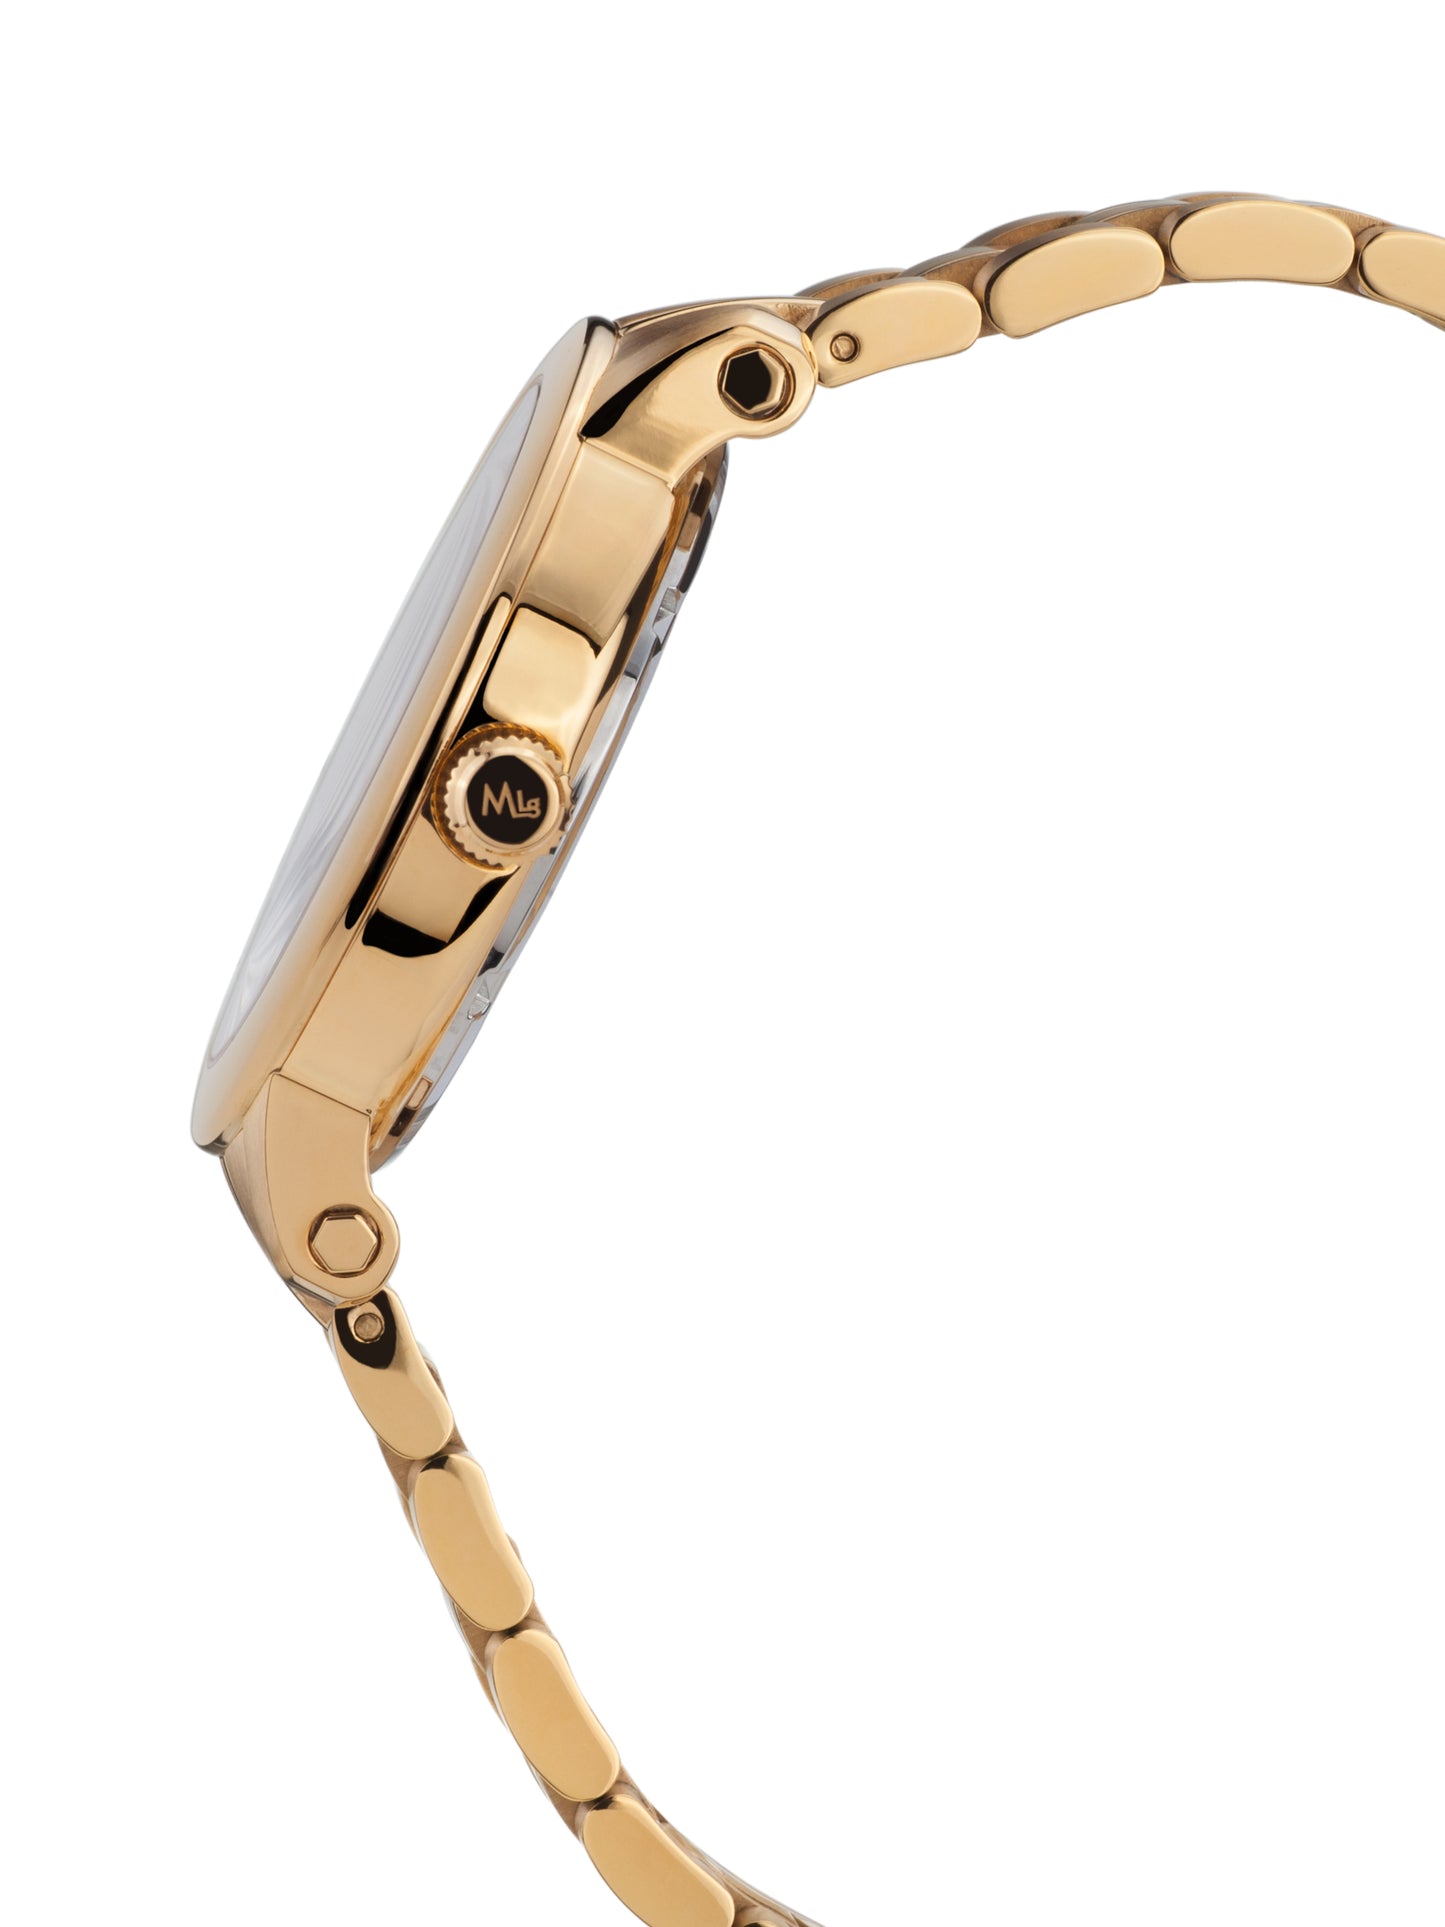 Automatic watches — Mille Étoiles — Mathieu Legrand — gold IP